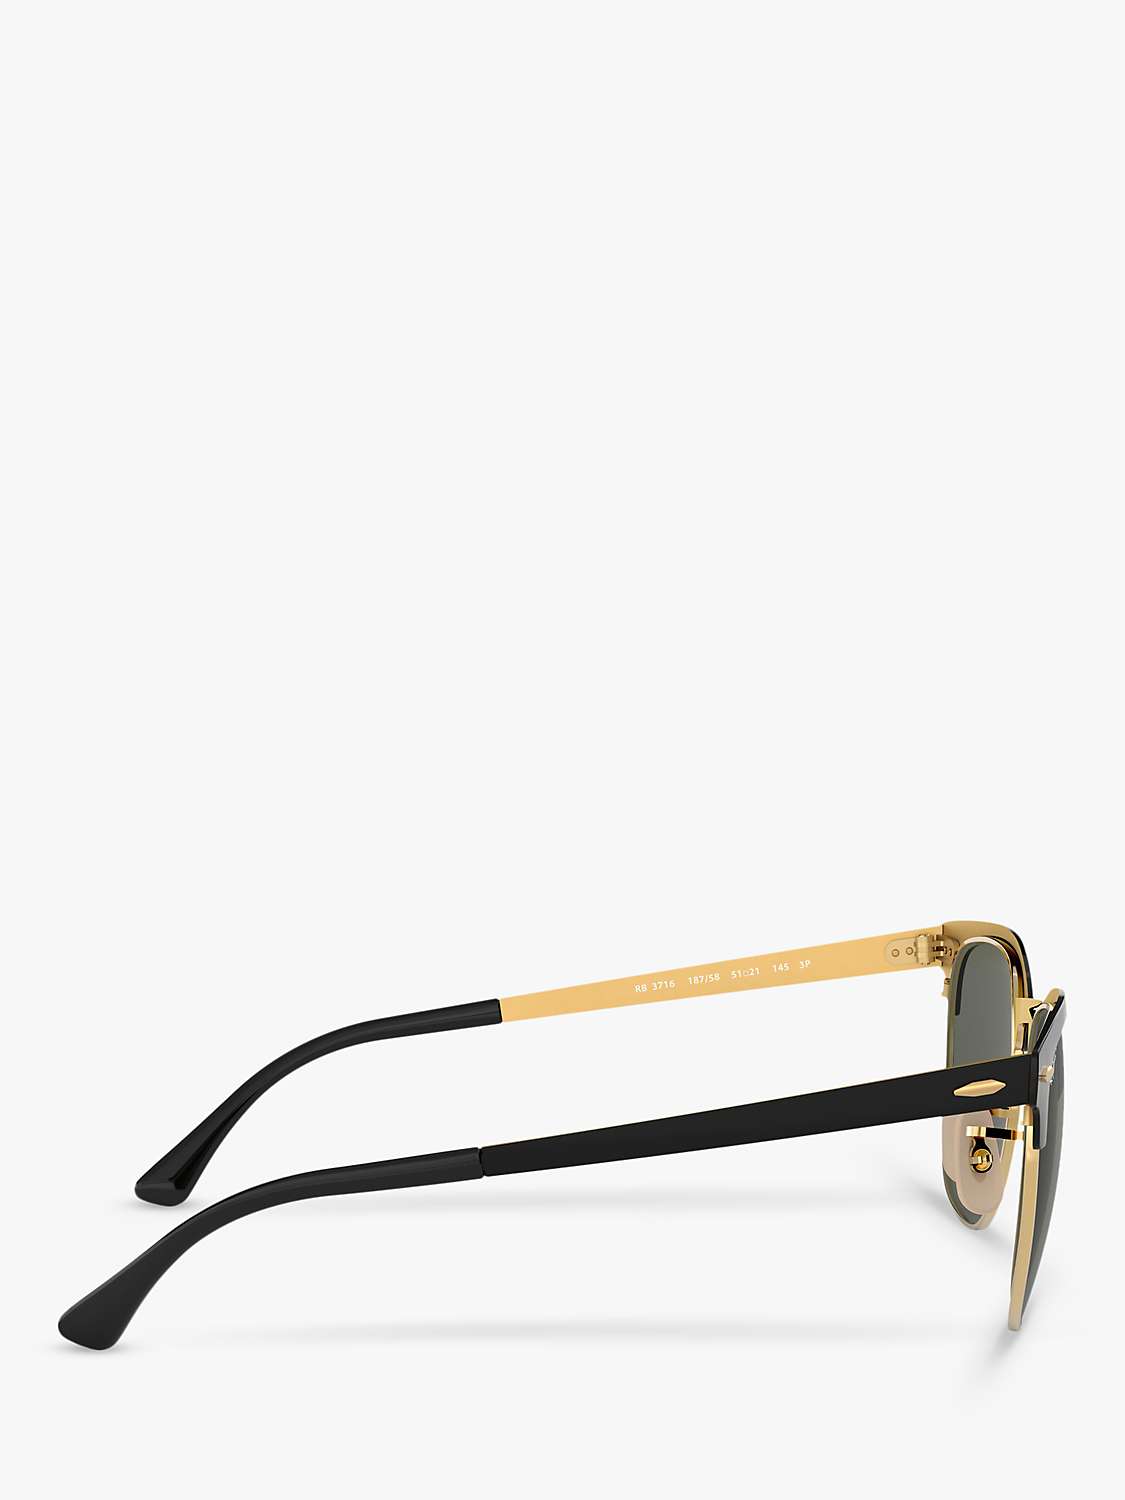 Buy Ray-Ban RB3716 Unisex Square Polarised Sunglasses, Black/Gold Online at johnlewis.com